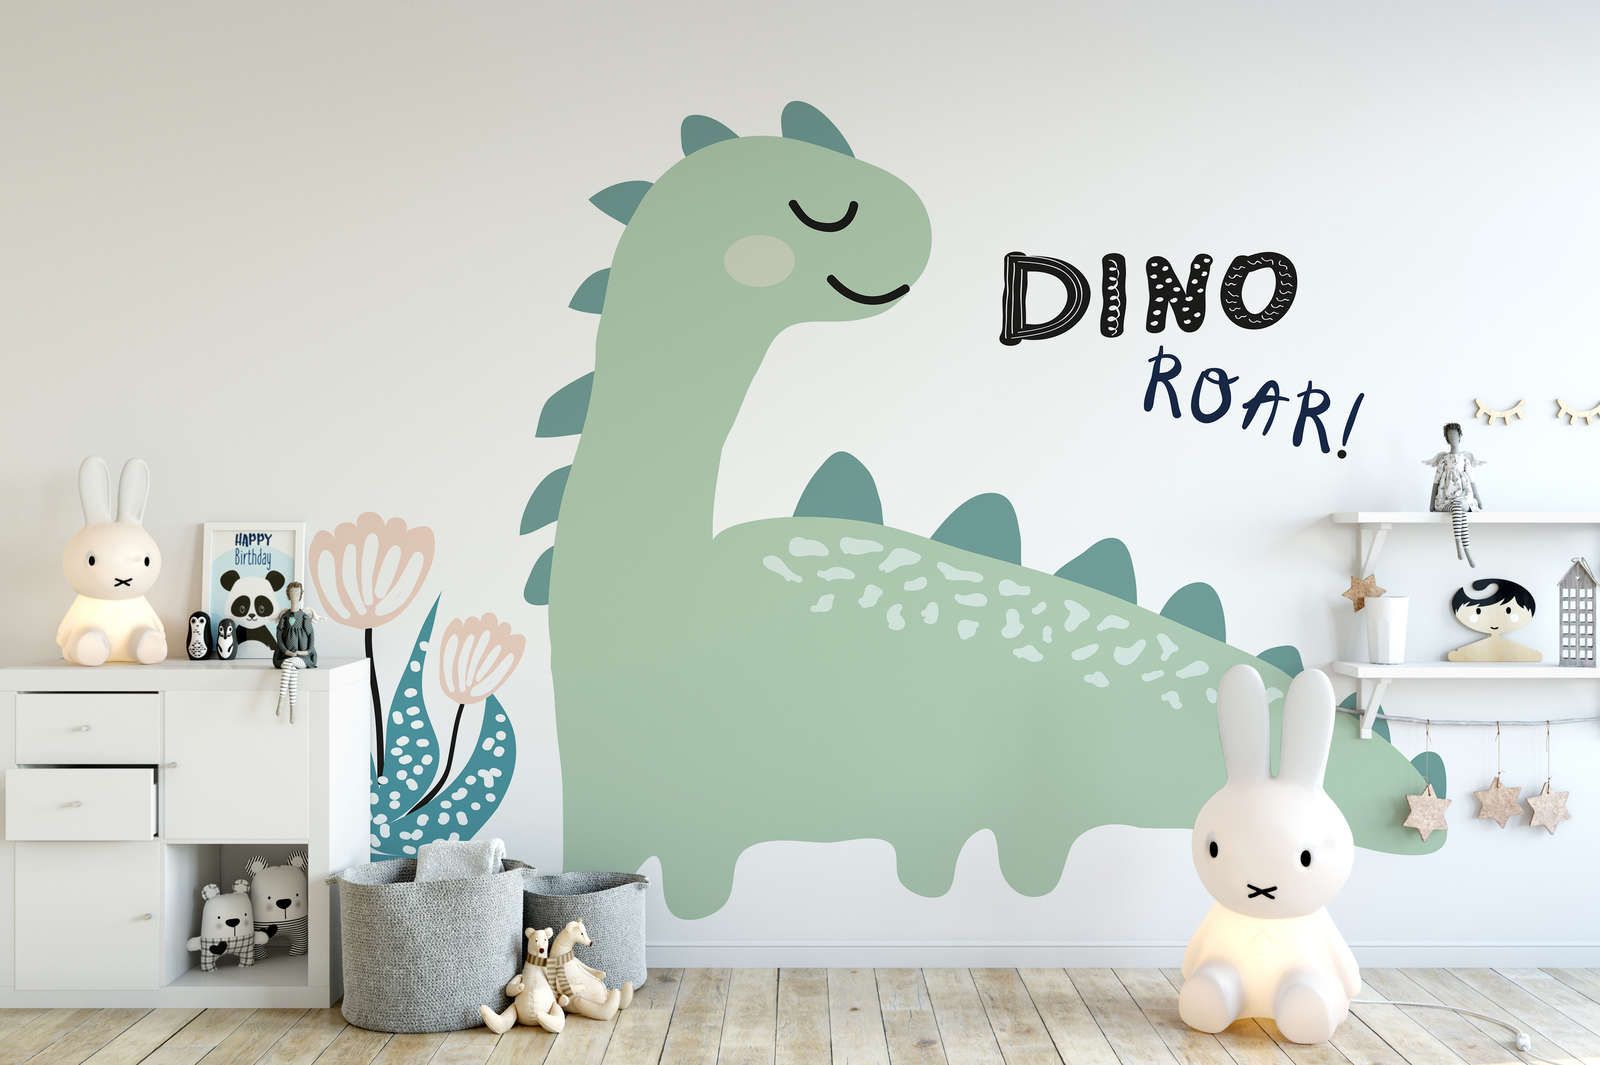             Painted Dinosaur Wallpaper - Textured Non-woven
        